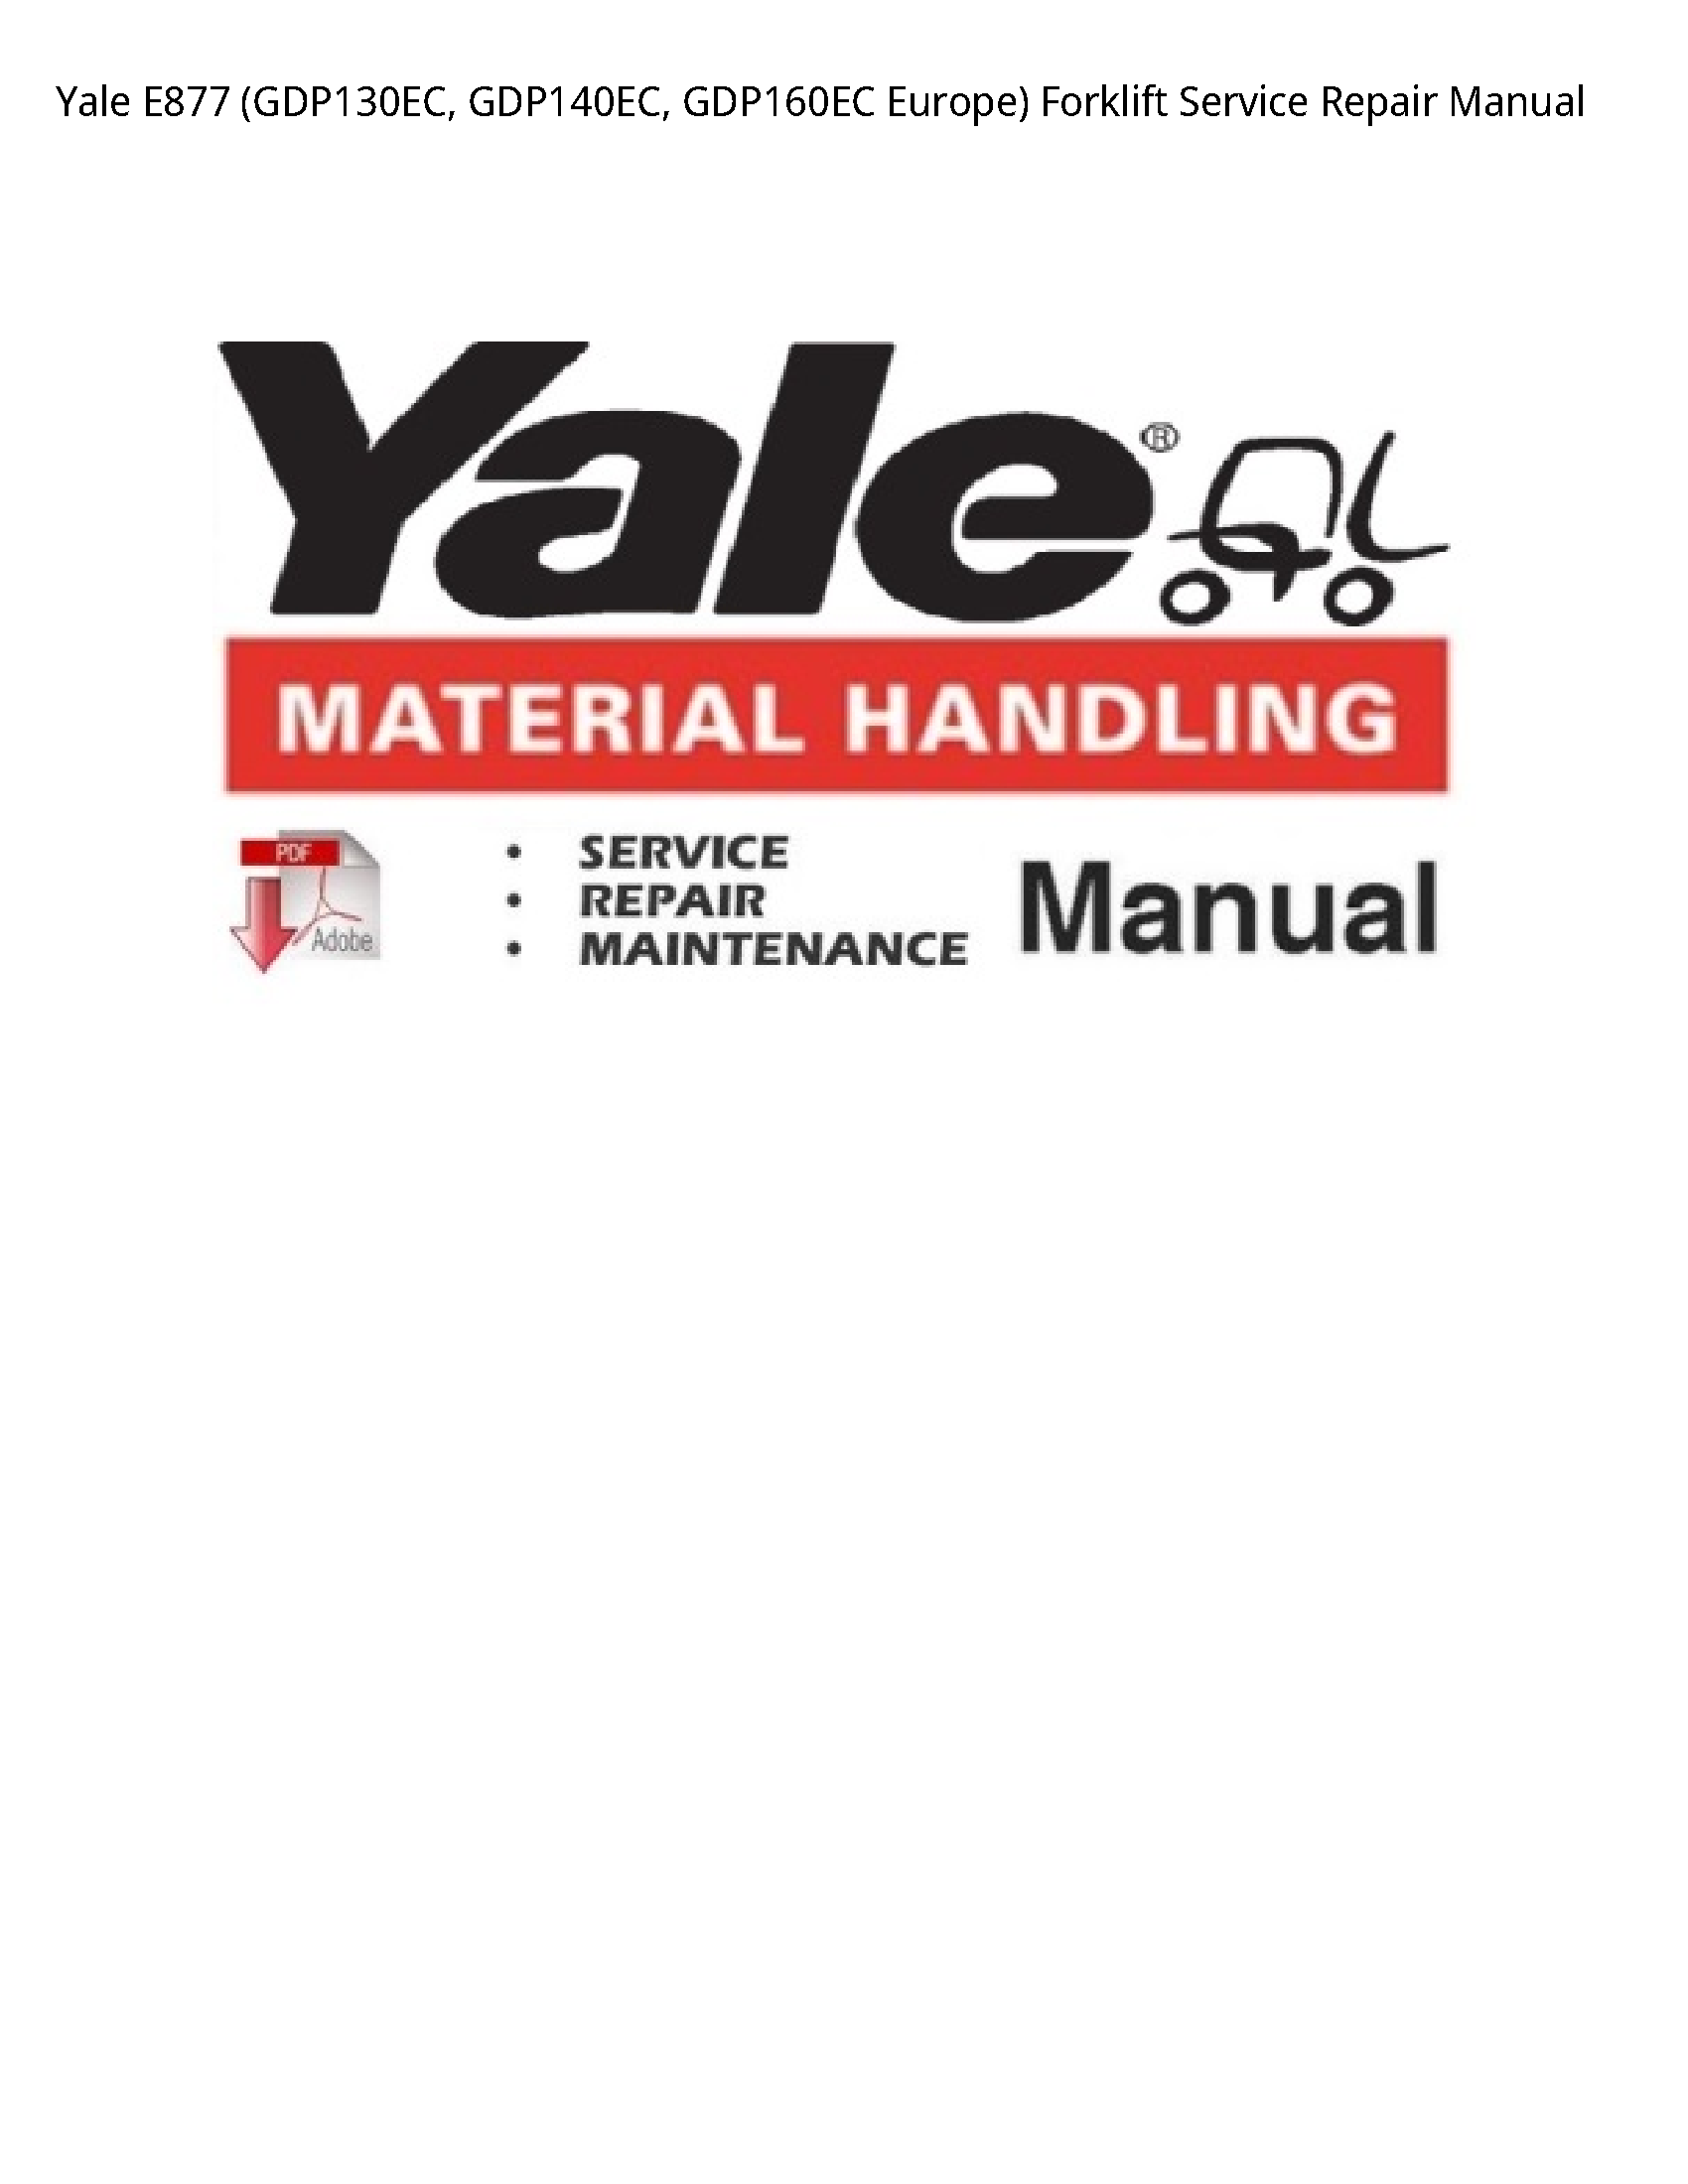 Yale E877 Europe) Forklift manual